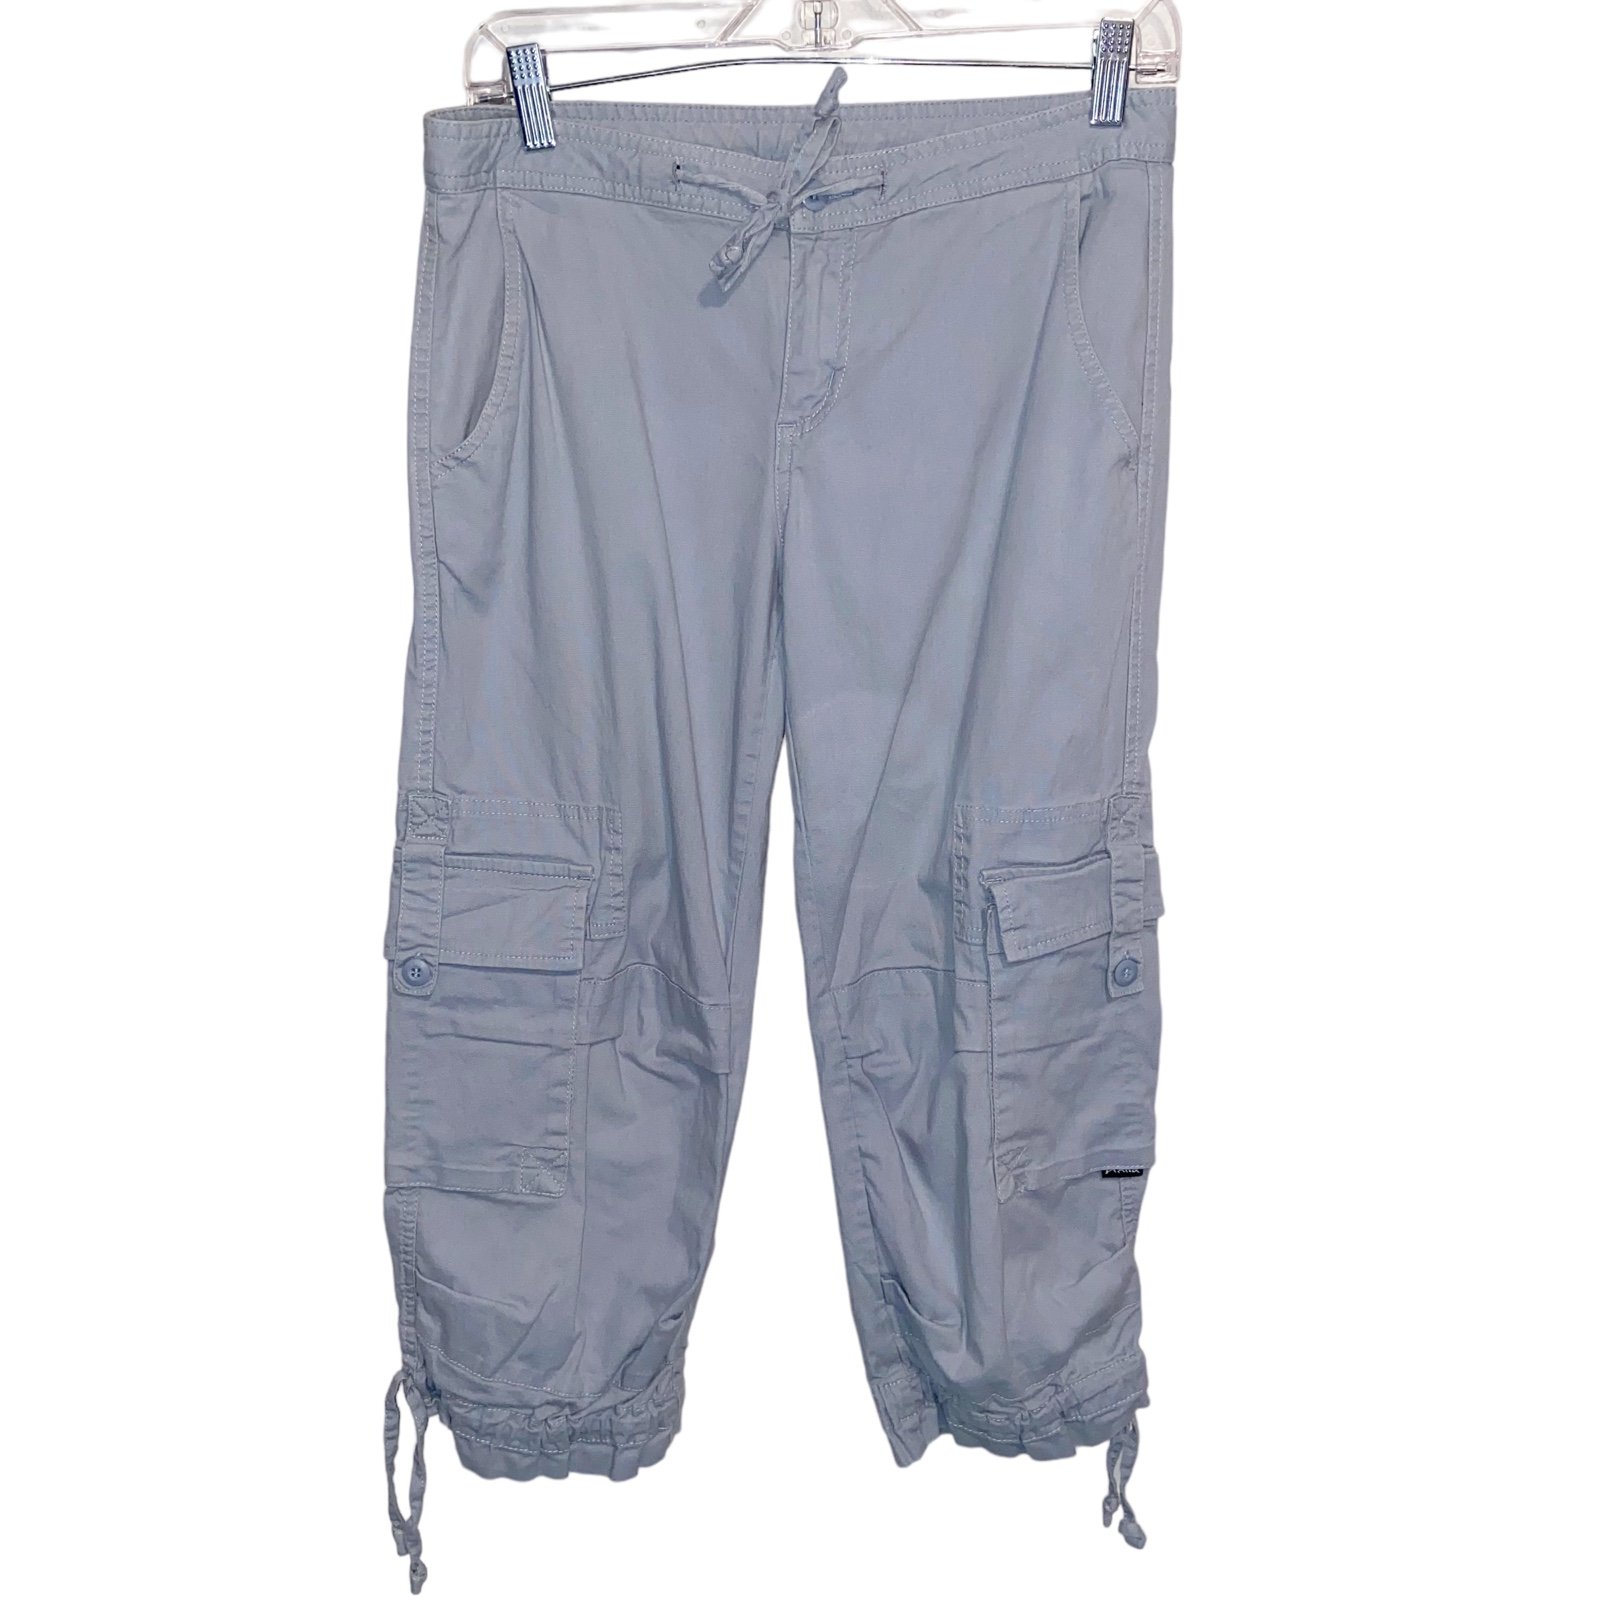 floor price Prana Capri Pants Womens Size 4 Cargo Pockets Gorpcore Outdoor Vintage Gray Good I2pc4V7NM online store